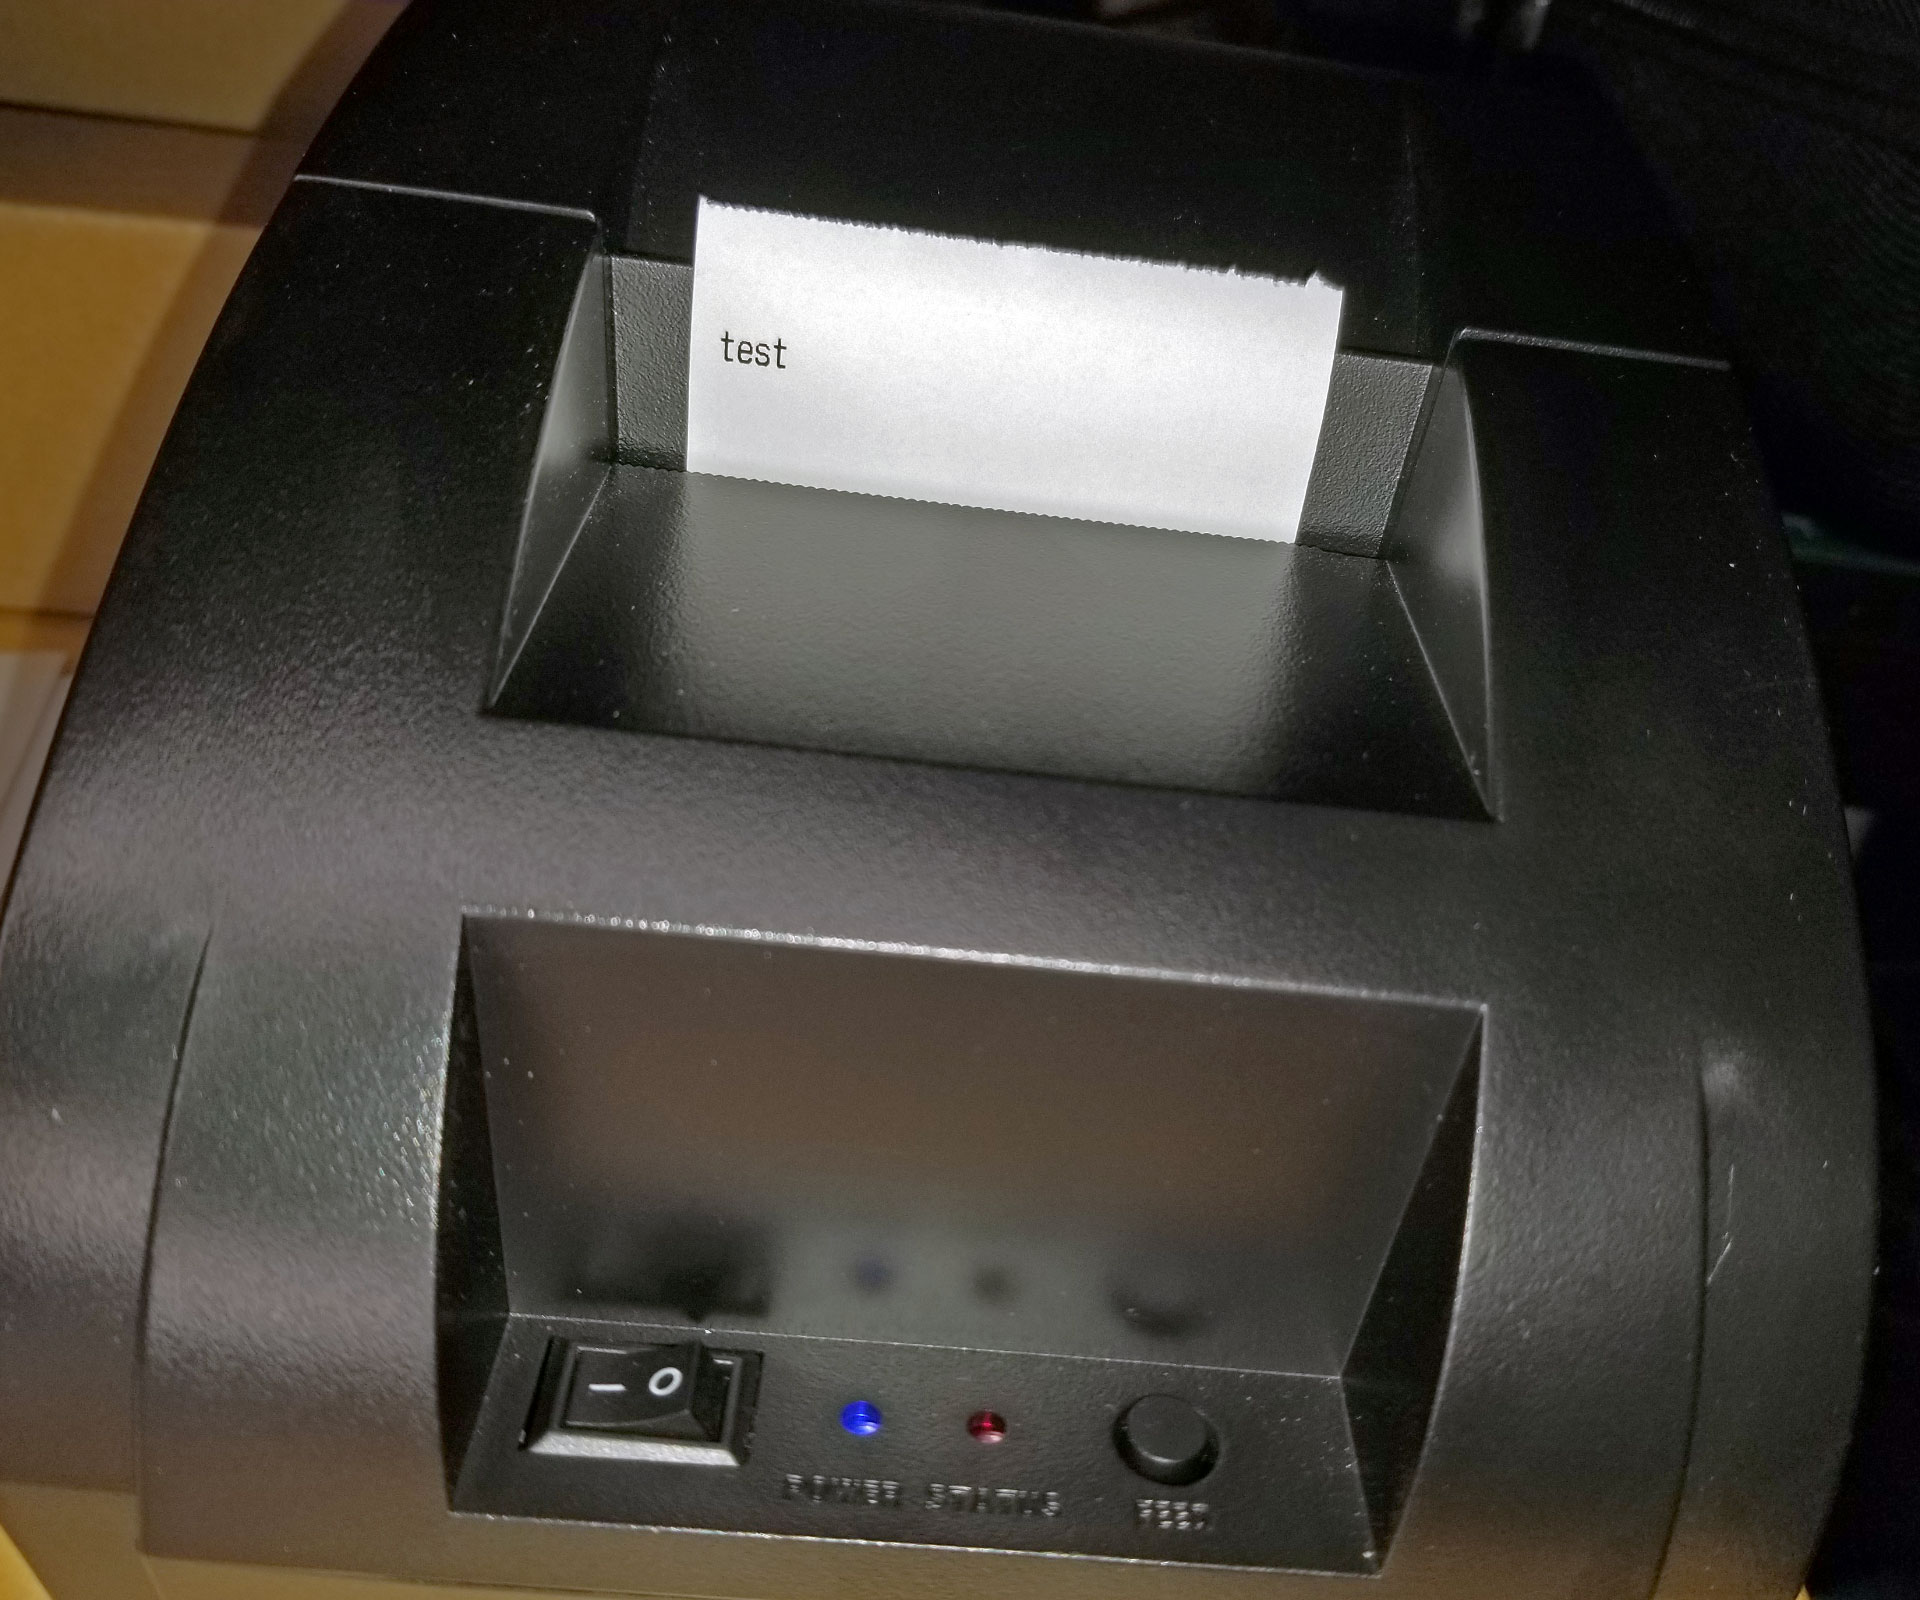 Successful test of receipt printer